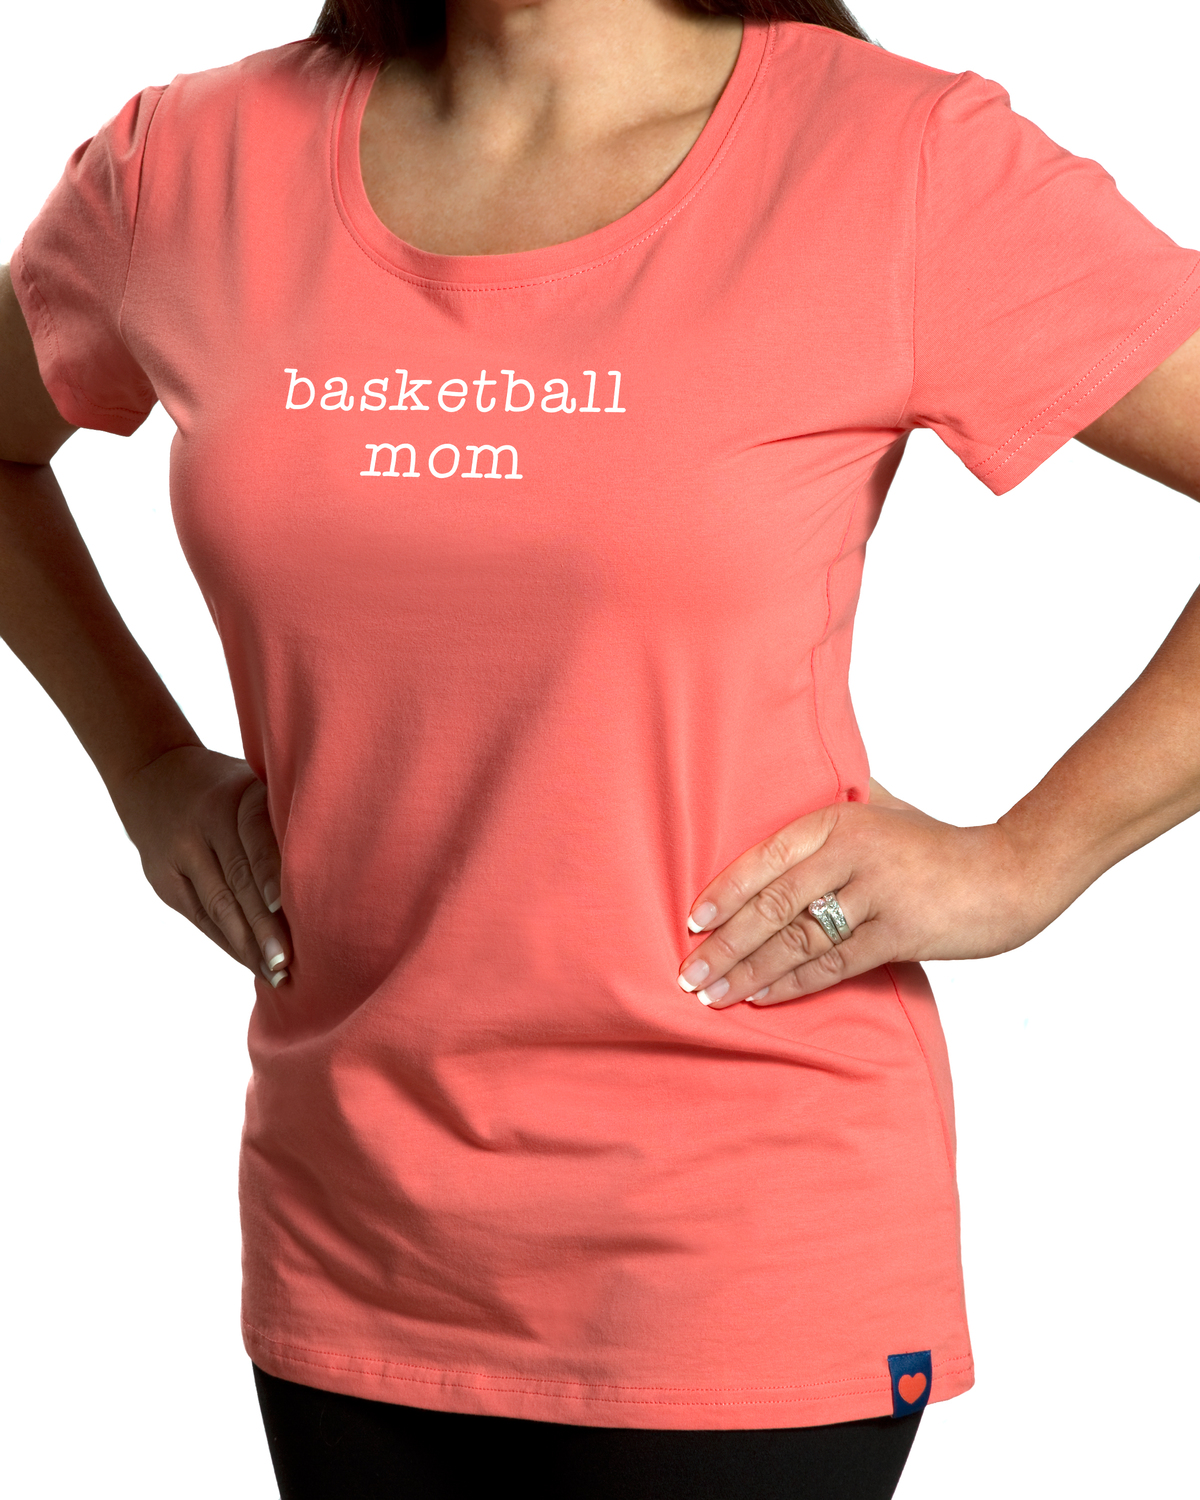 Basketball Mom by Mom Love - Basketball Mom - Small Coral T-Shirt

